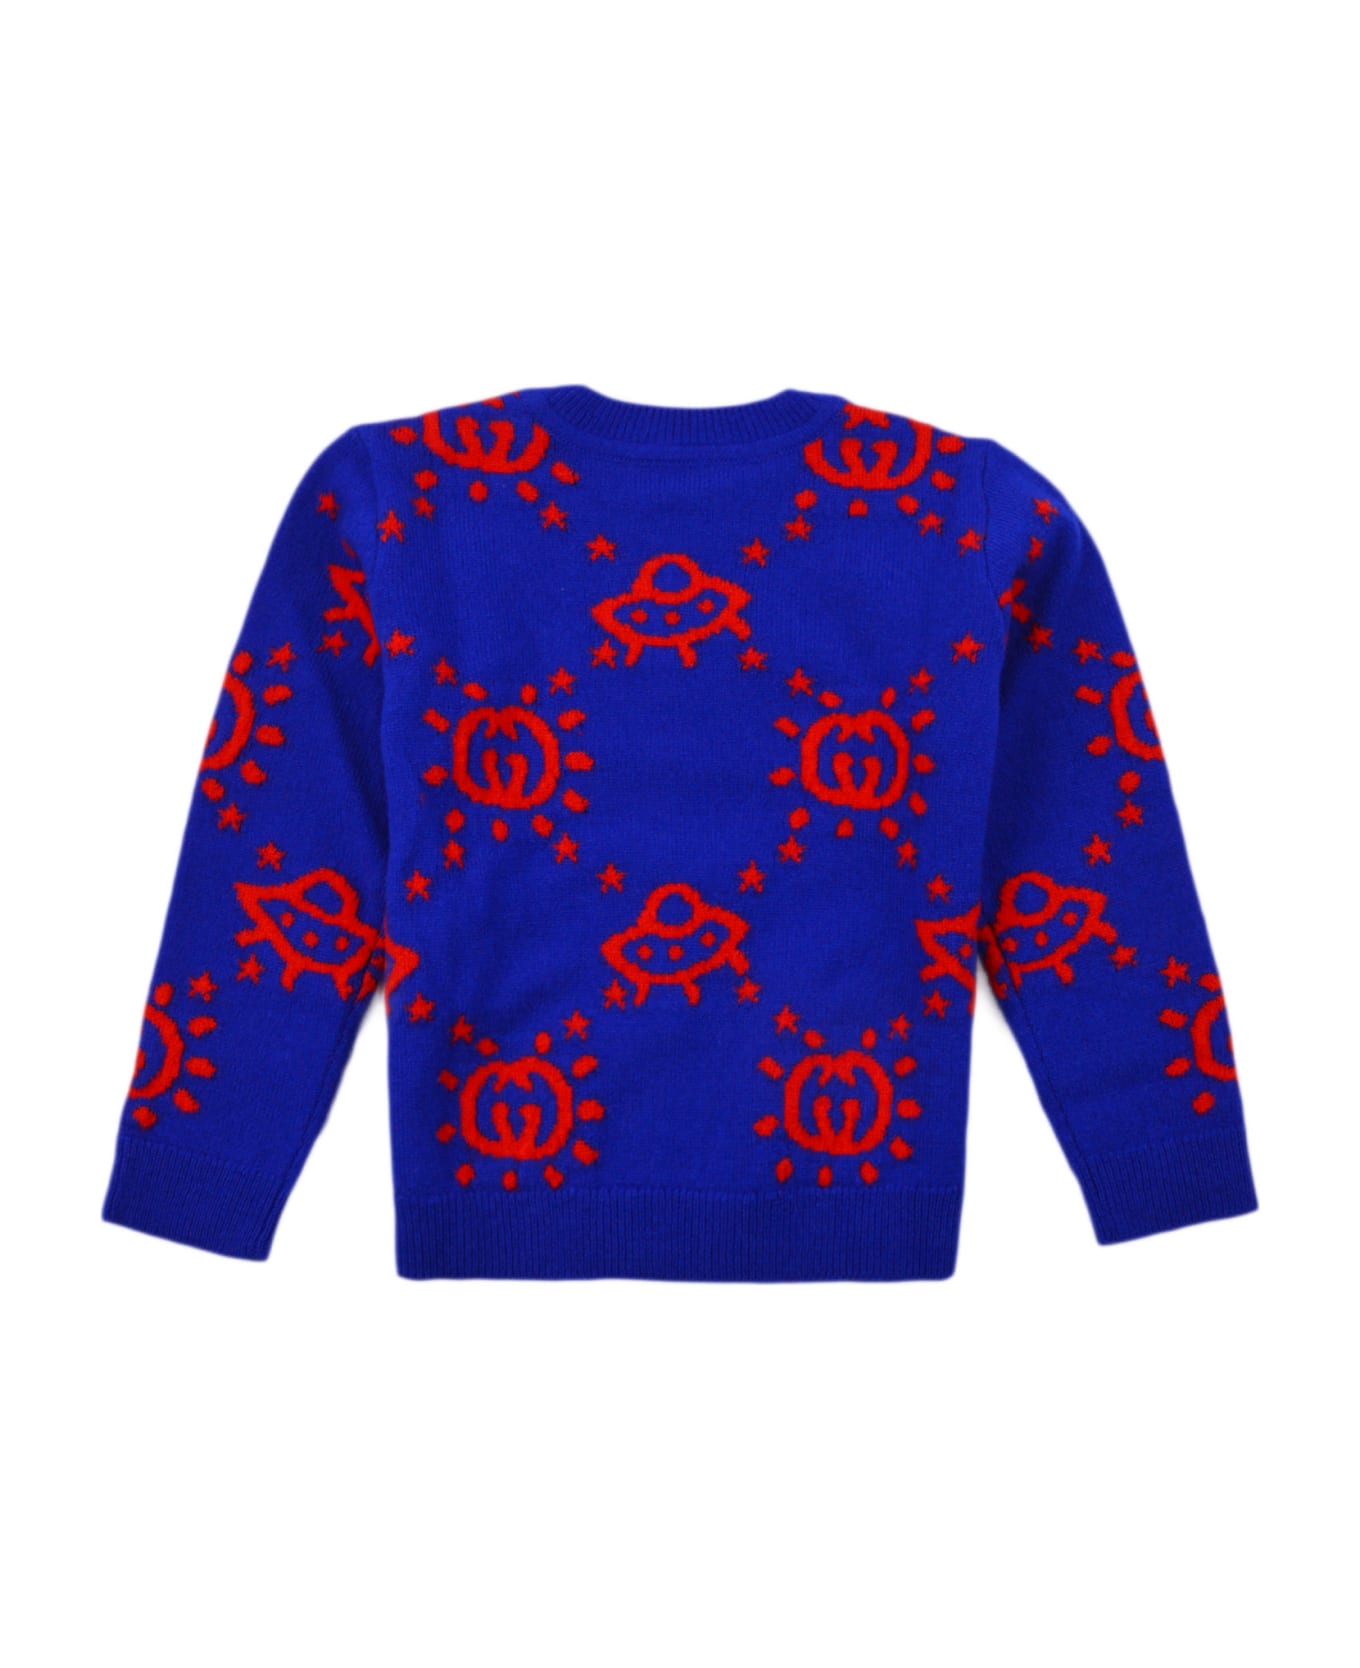 Gucci Wool Sweater - Blue